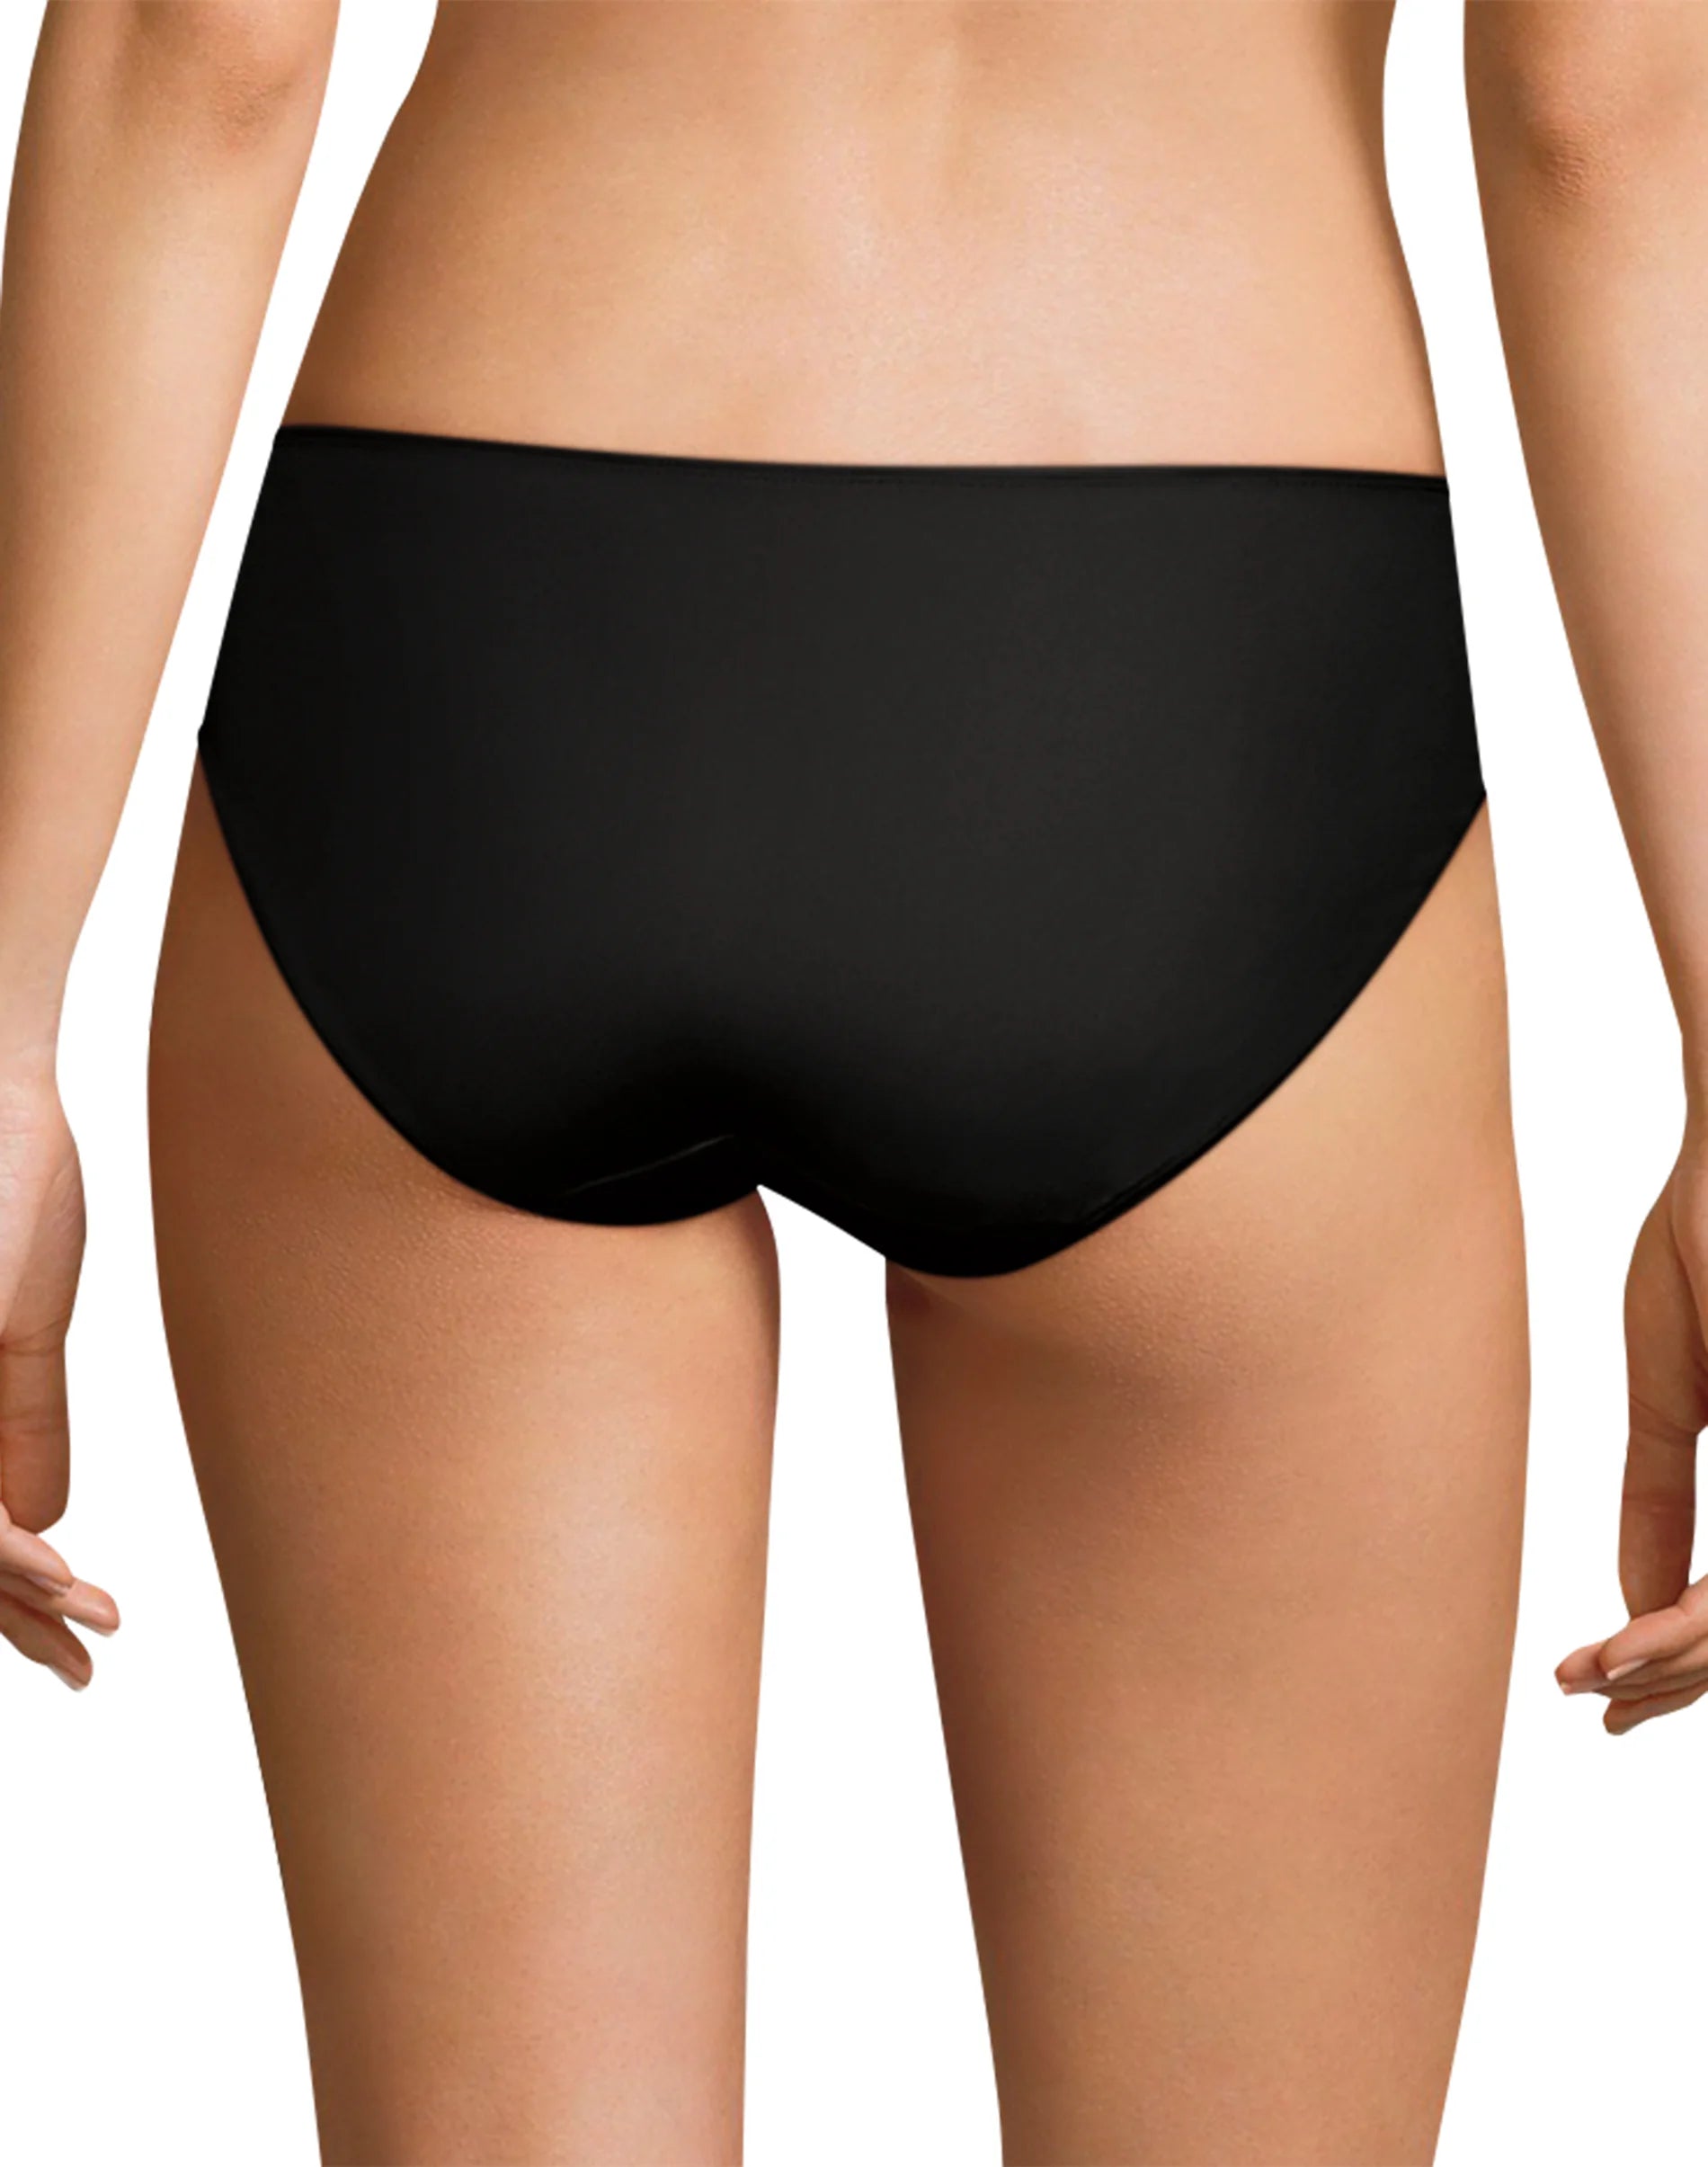 RM42AS - Hanes Womens Recycled Microfiber Bikini 3-Pack